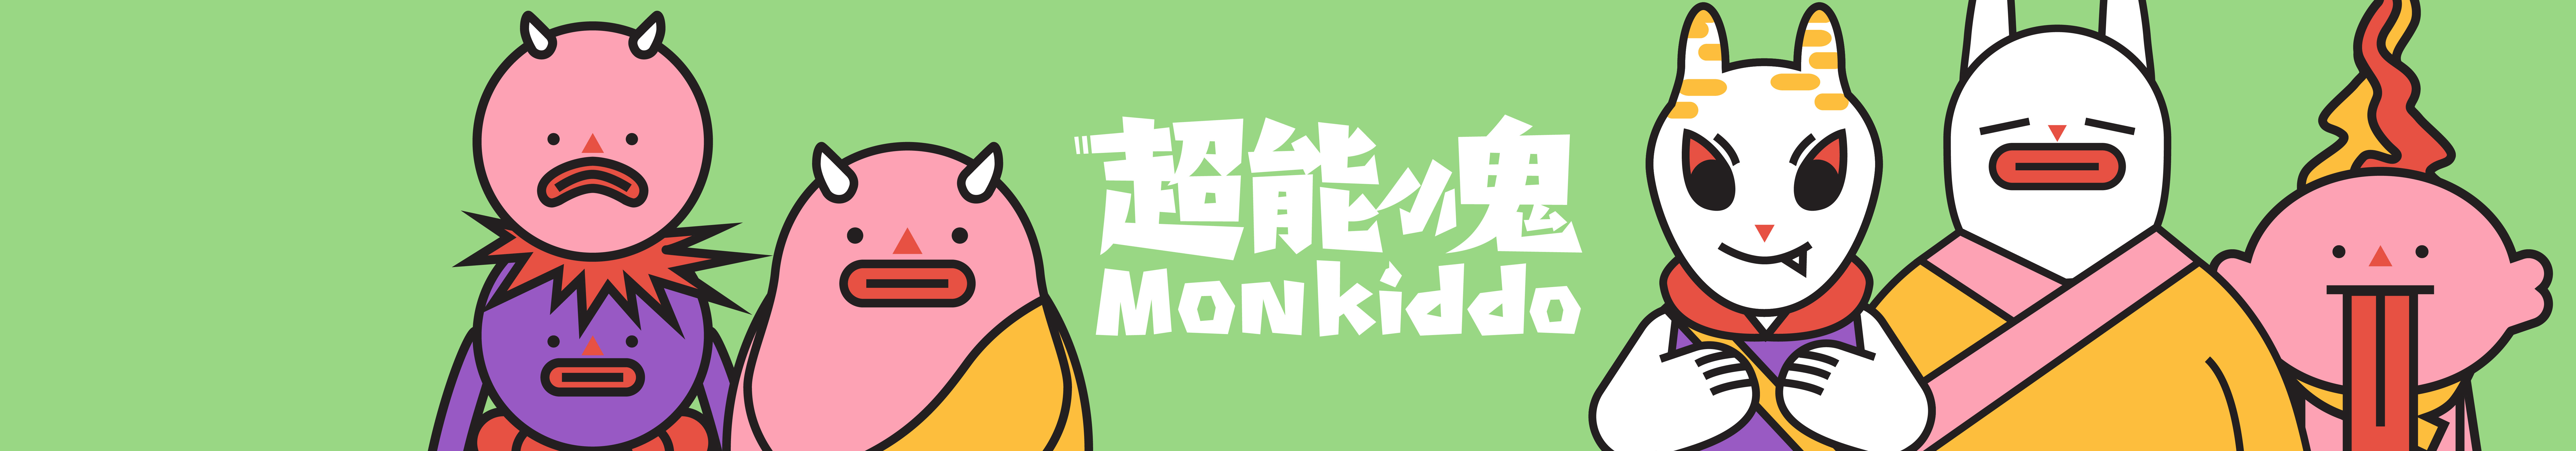 MonKiddo 超能小鬼's profile banner